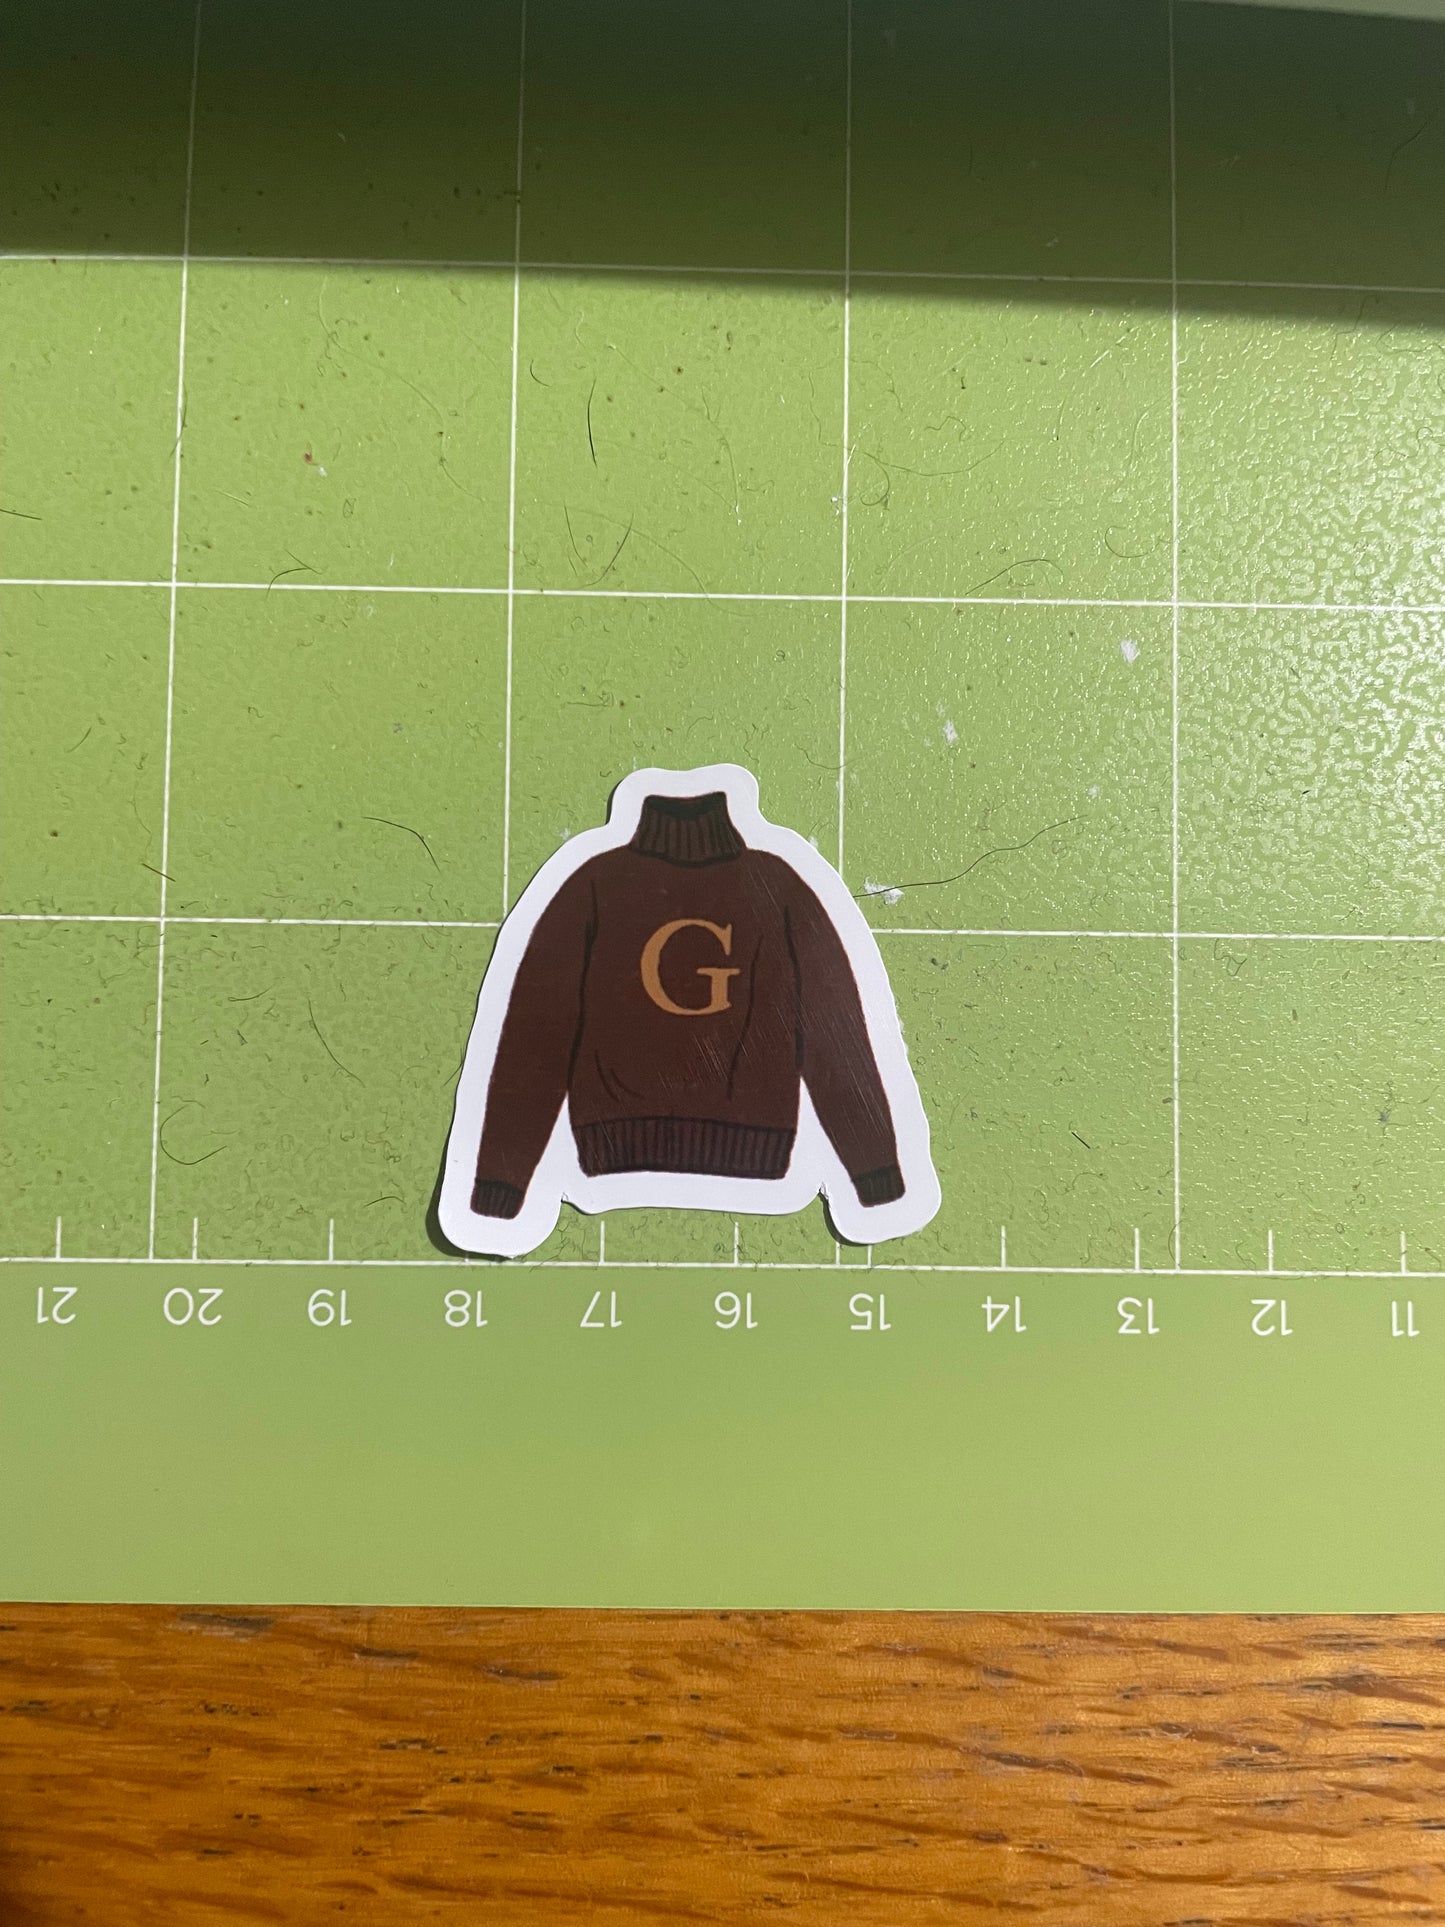 HP G sweater sticker